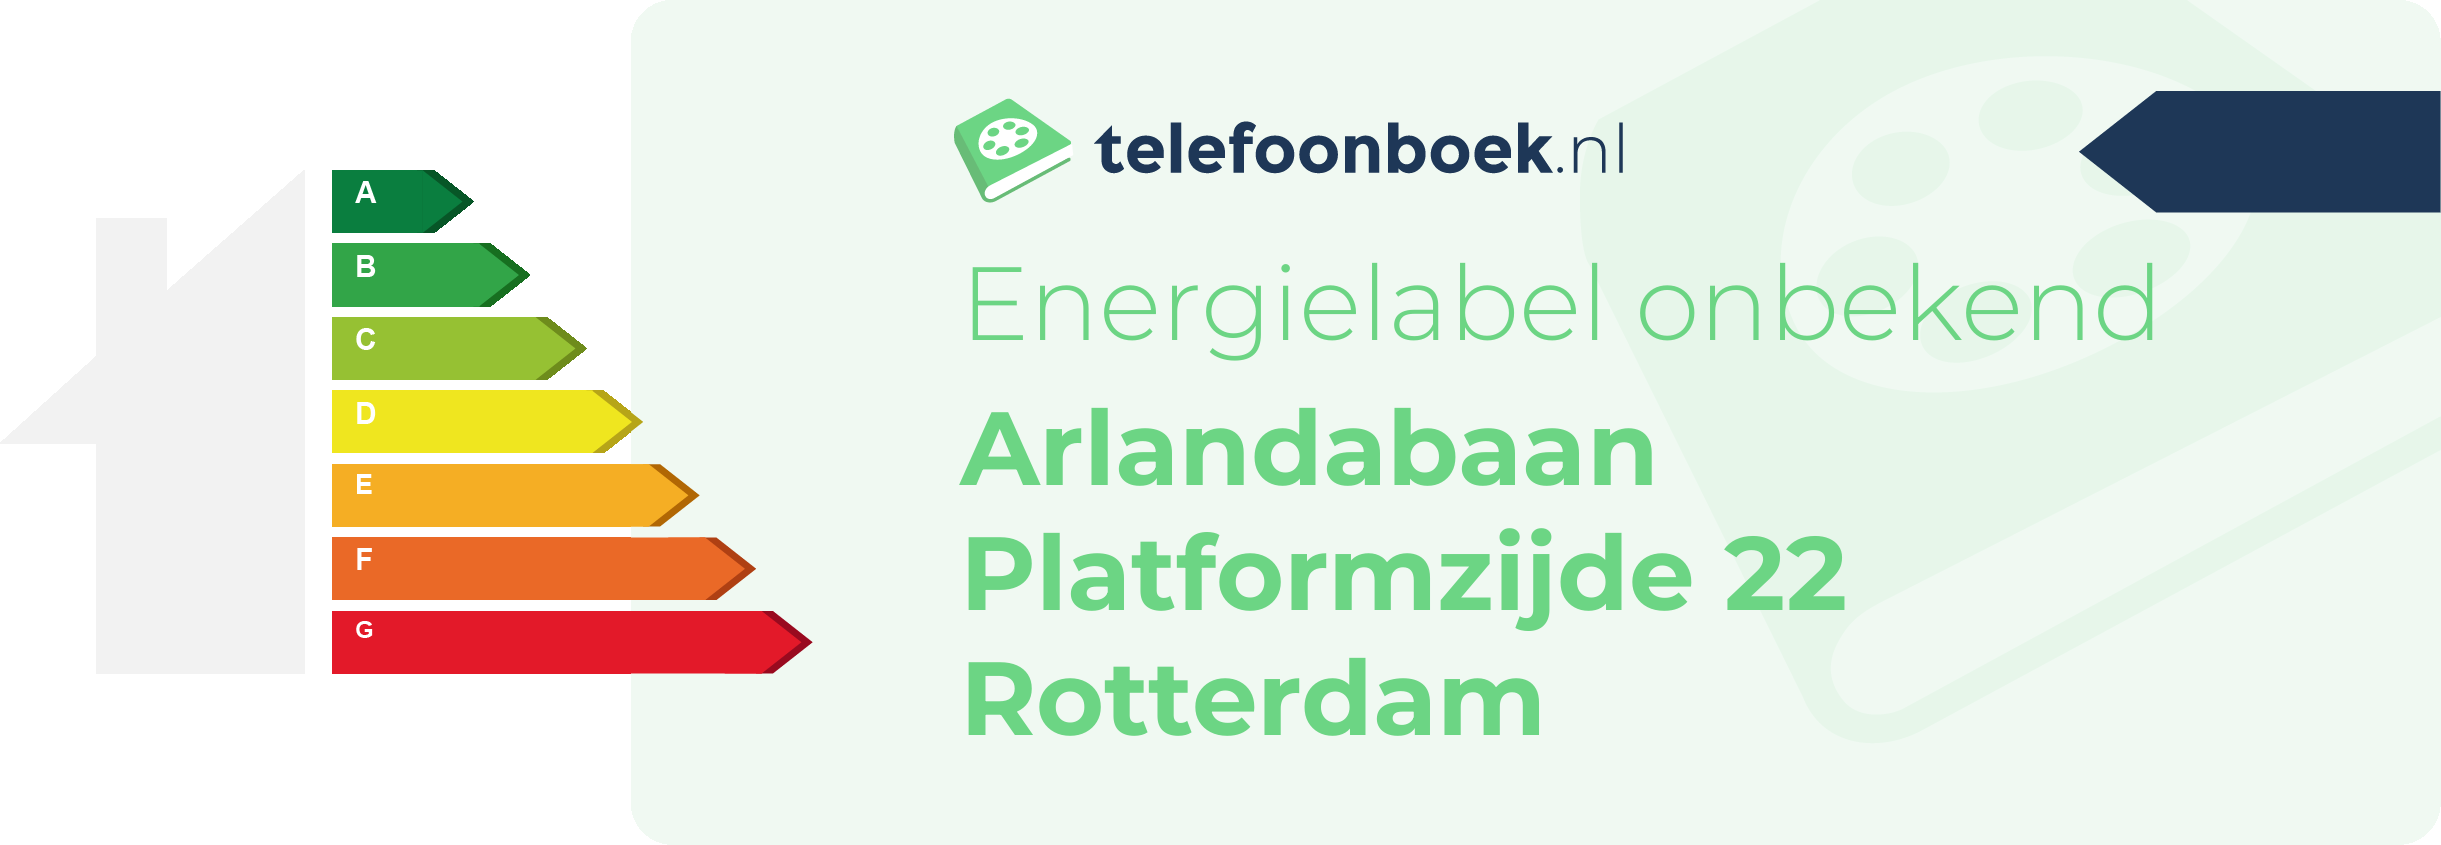 Energielabel Arlandabaan Platformzijde 22 Rotterdam